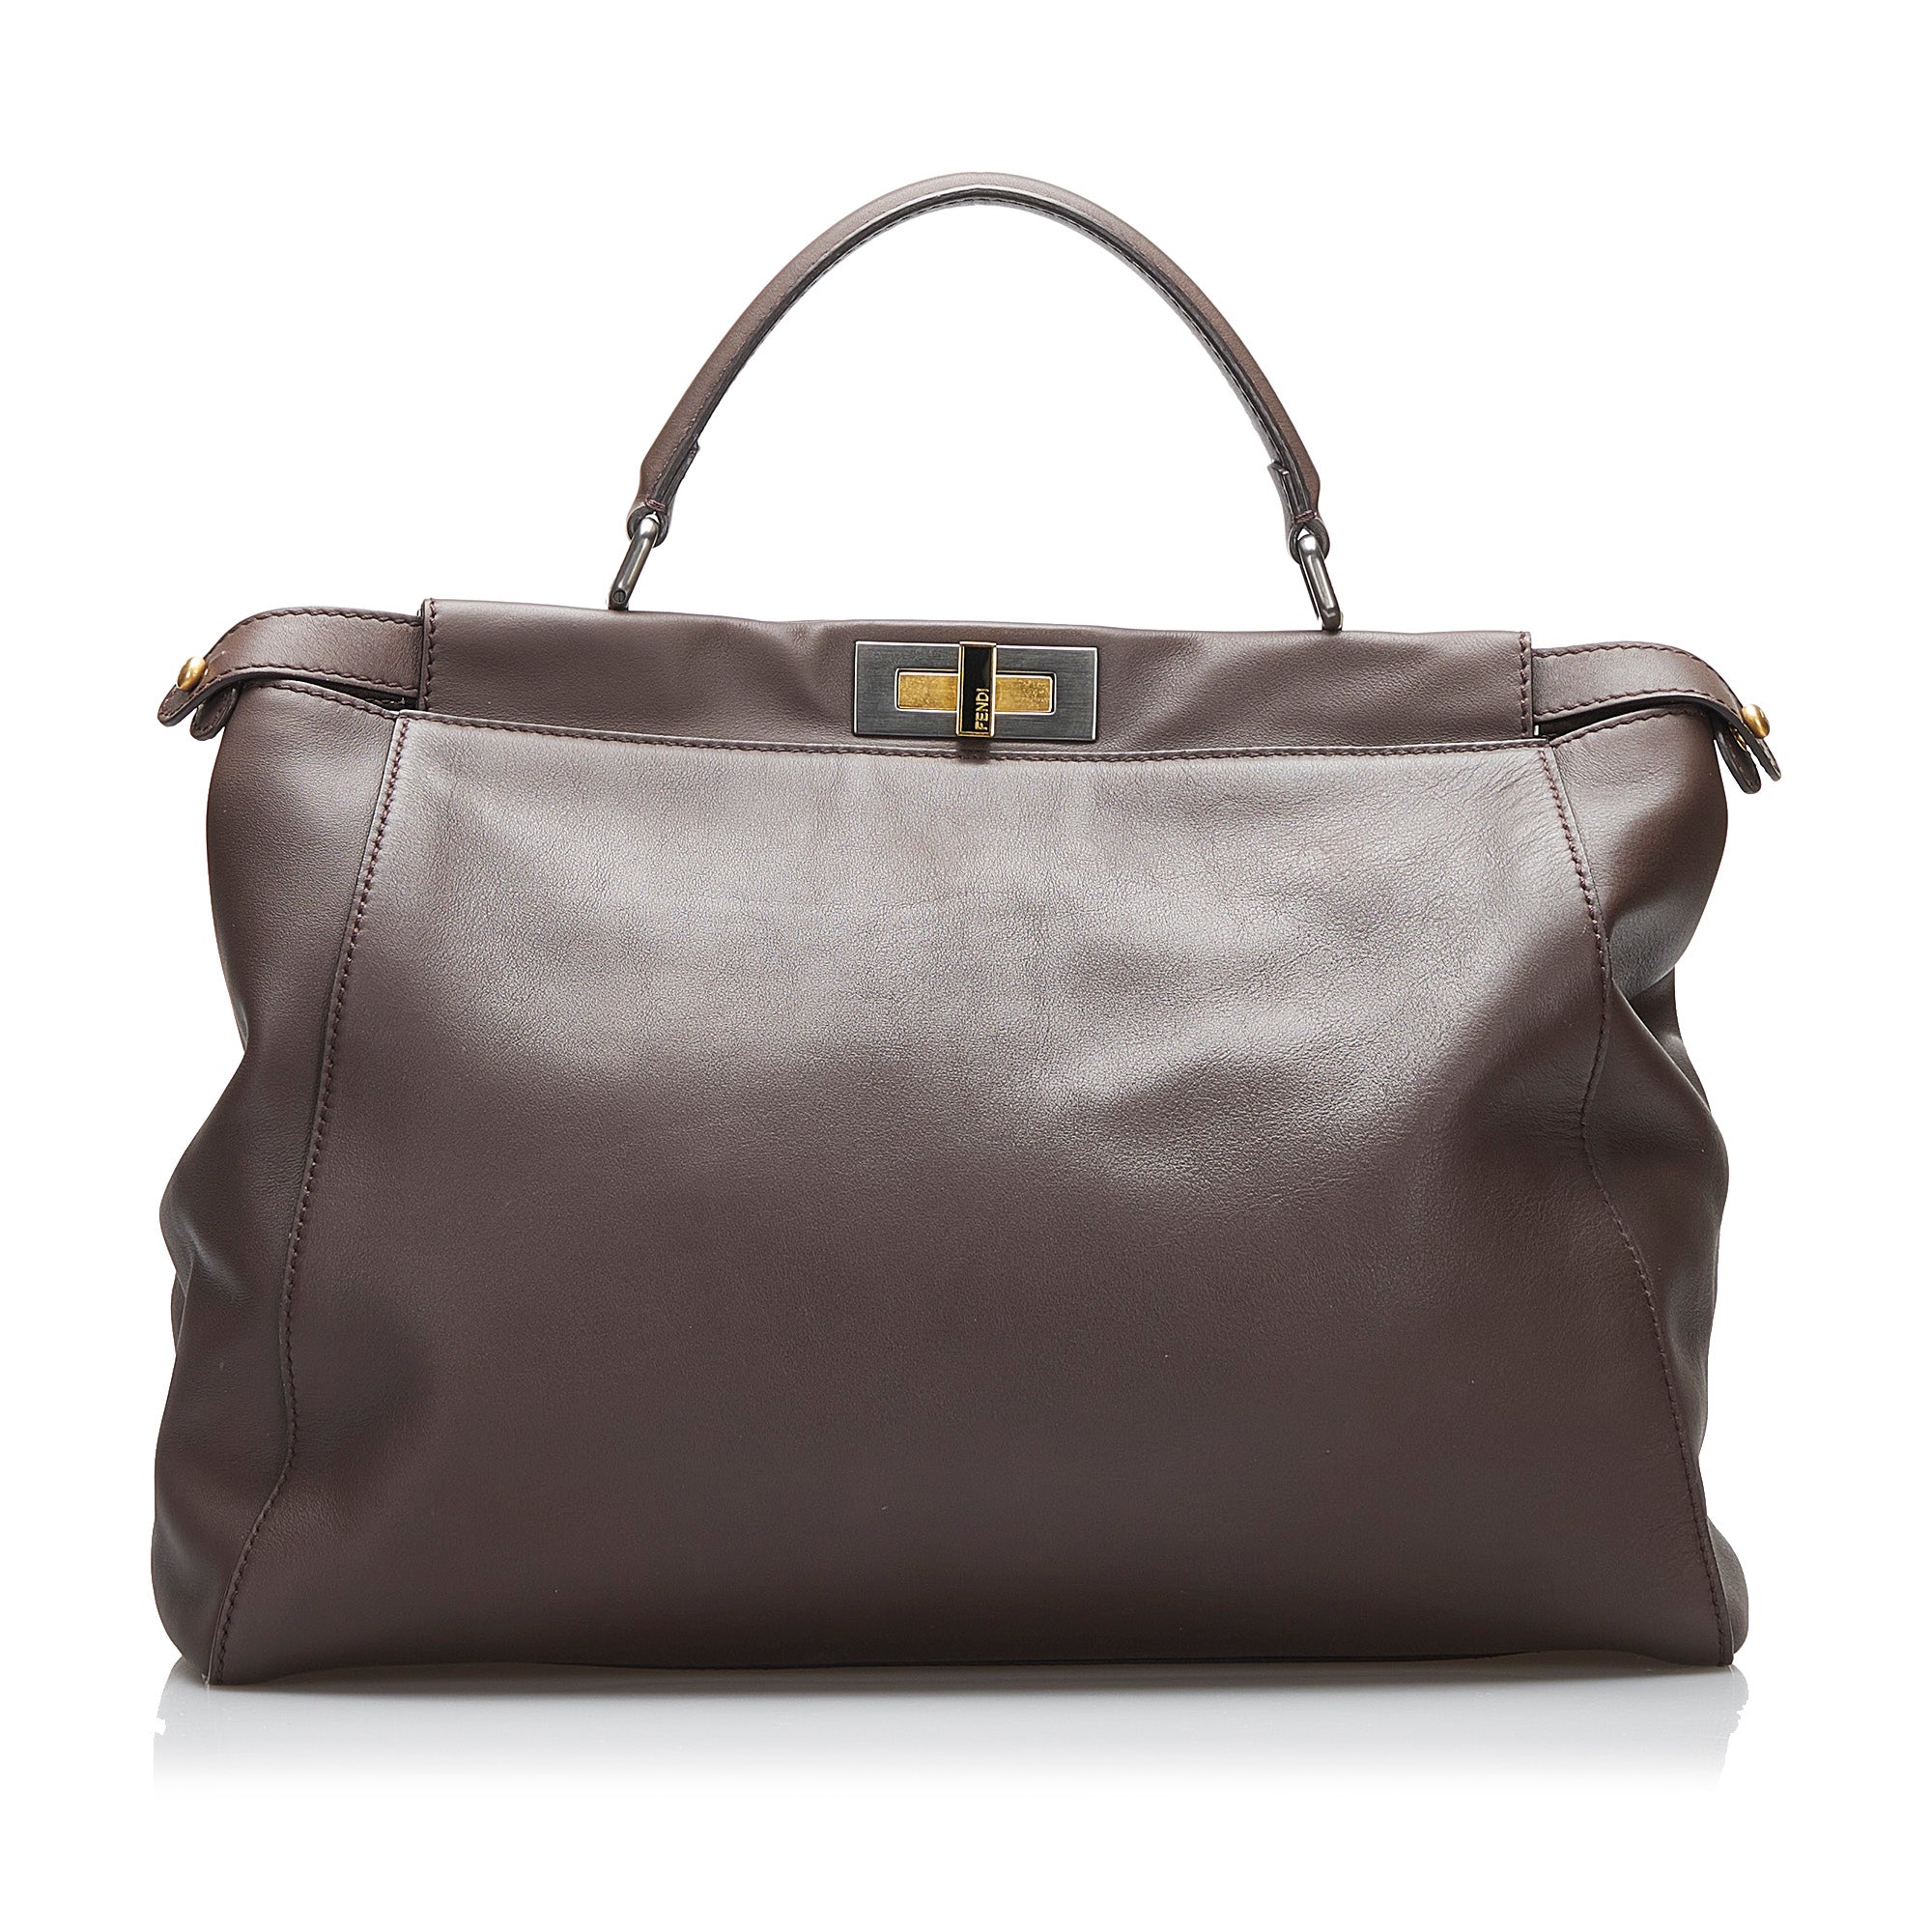 Fendi Tan Leather Large Peekaboo Top Handle Bag Fendi